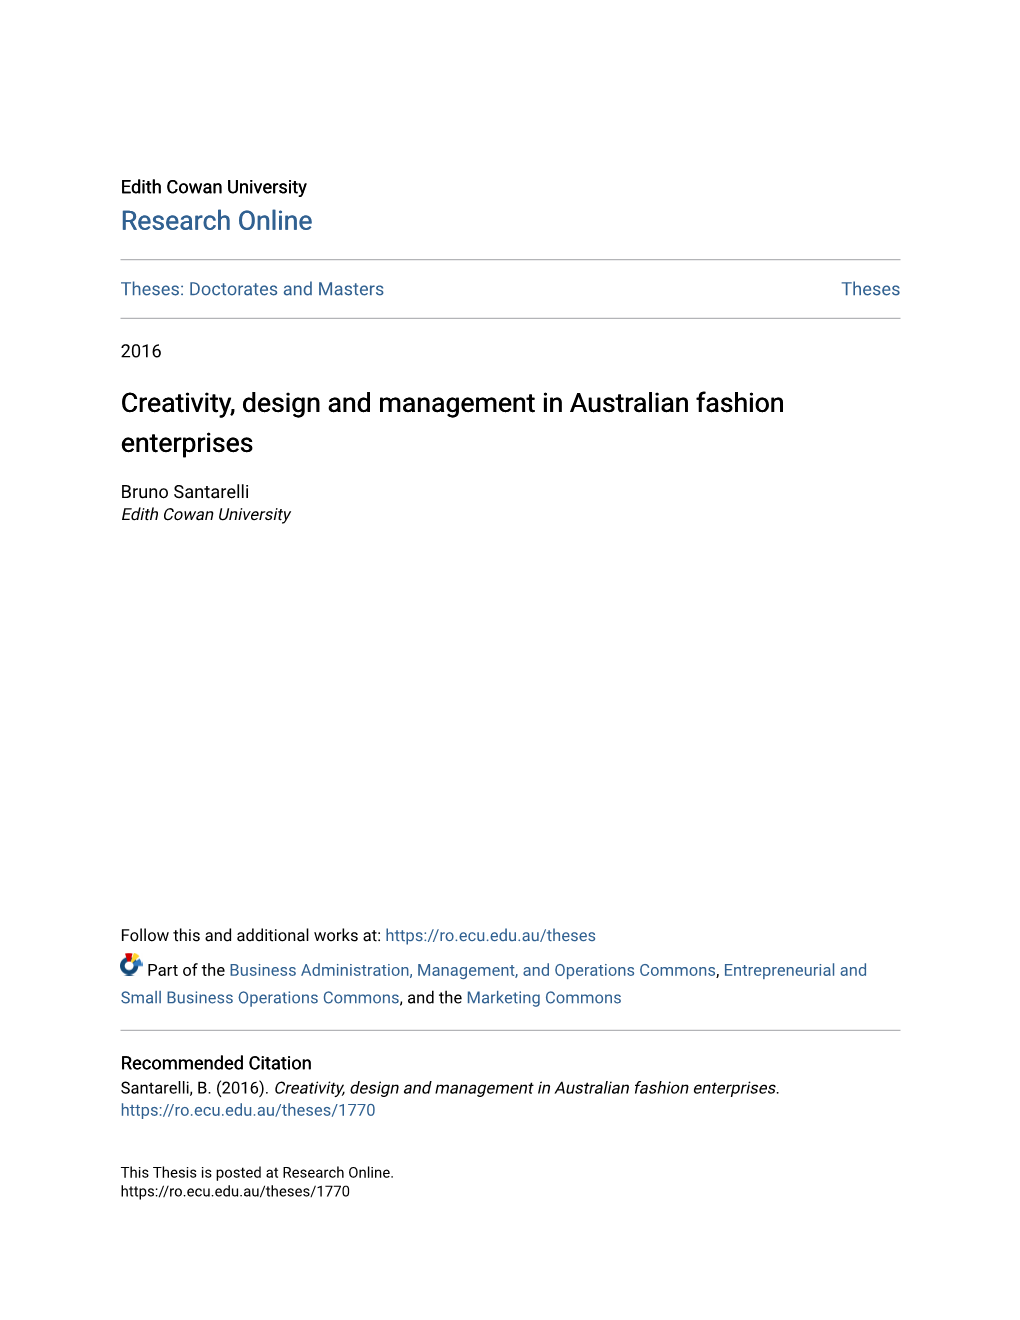 Creativity, Design and Management in Australian Fashion Enterprises